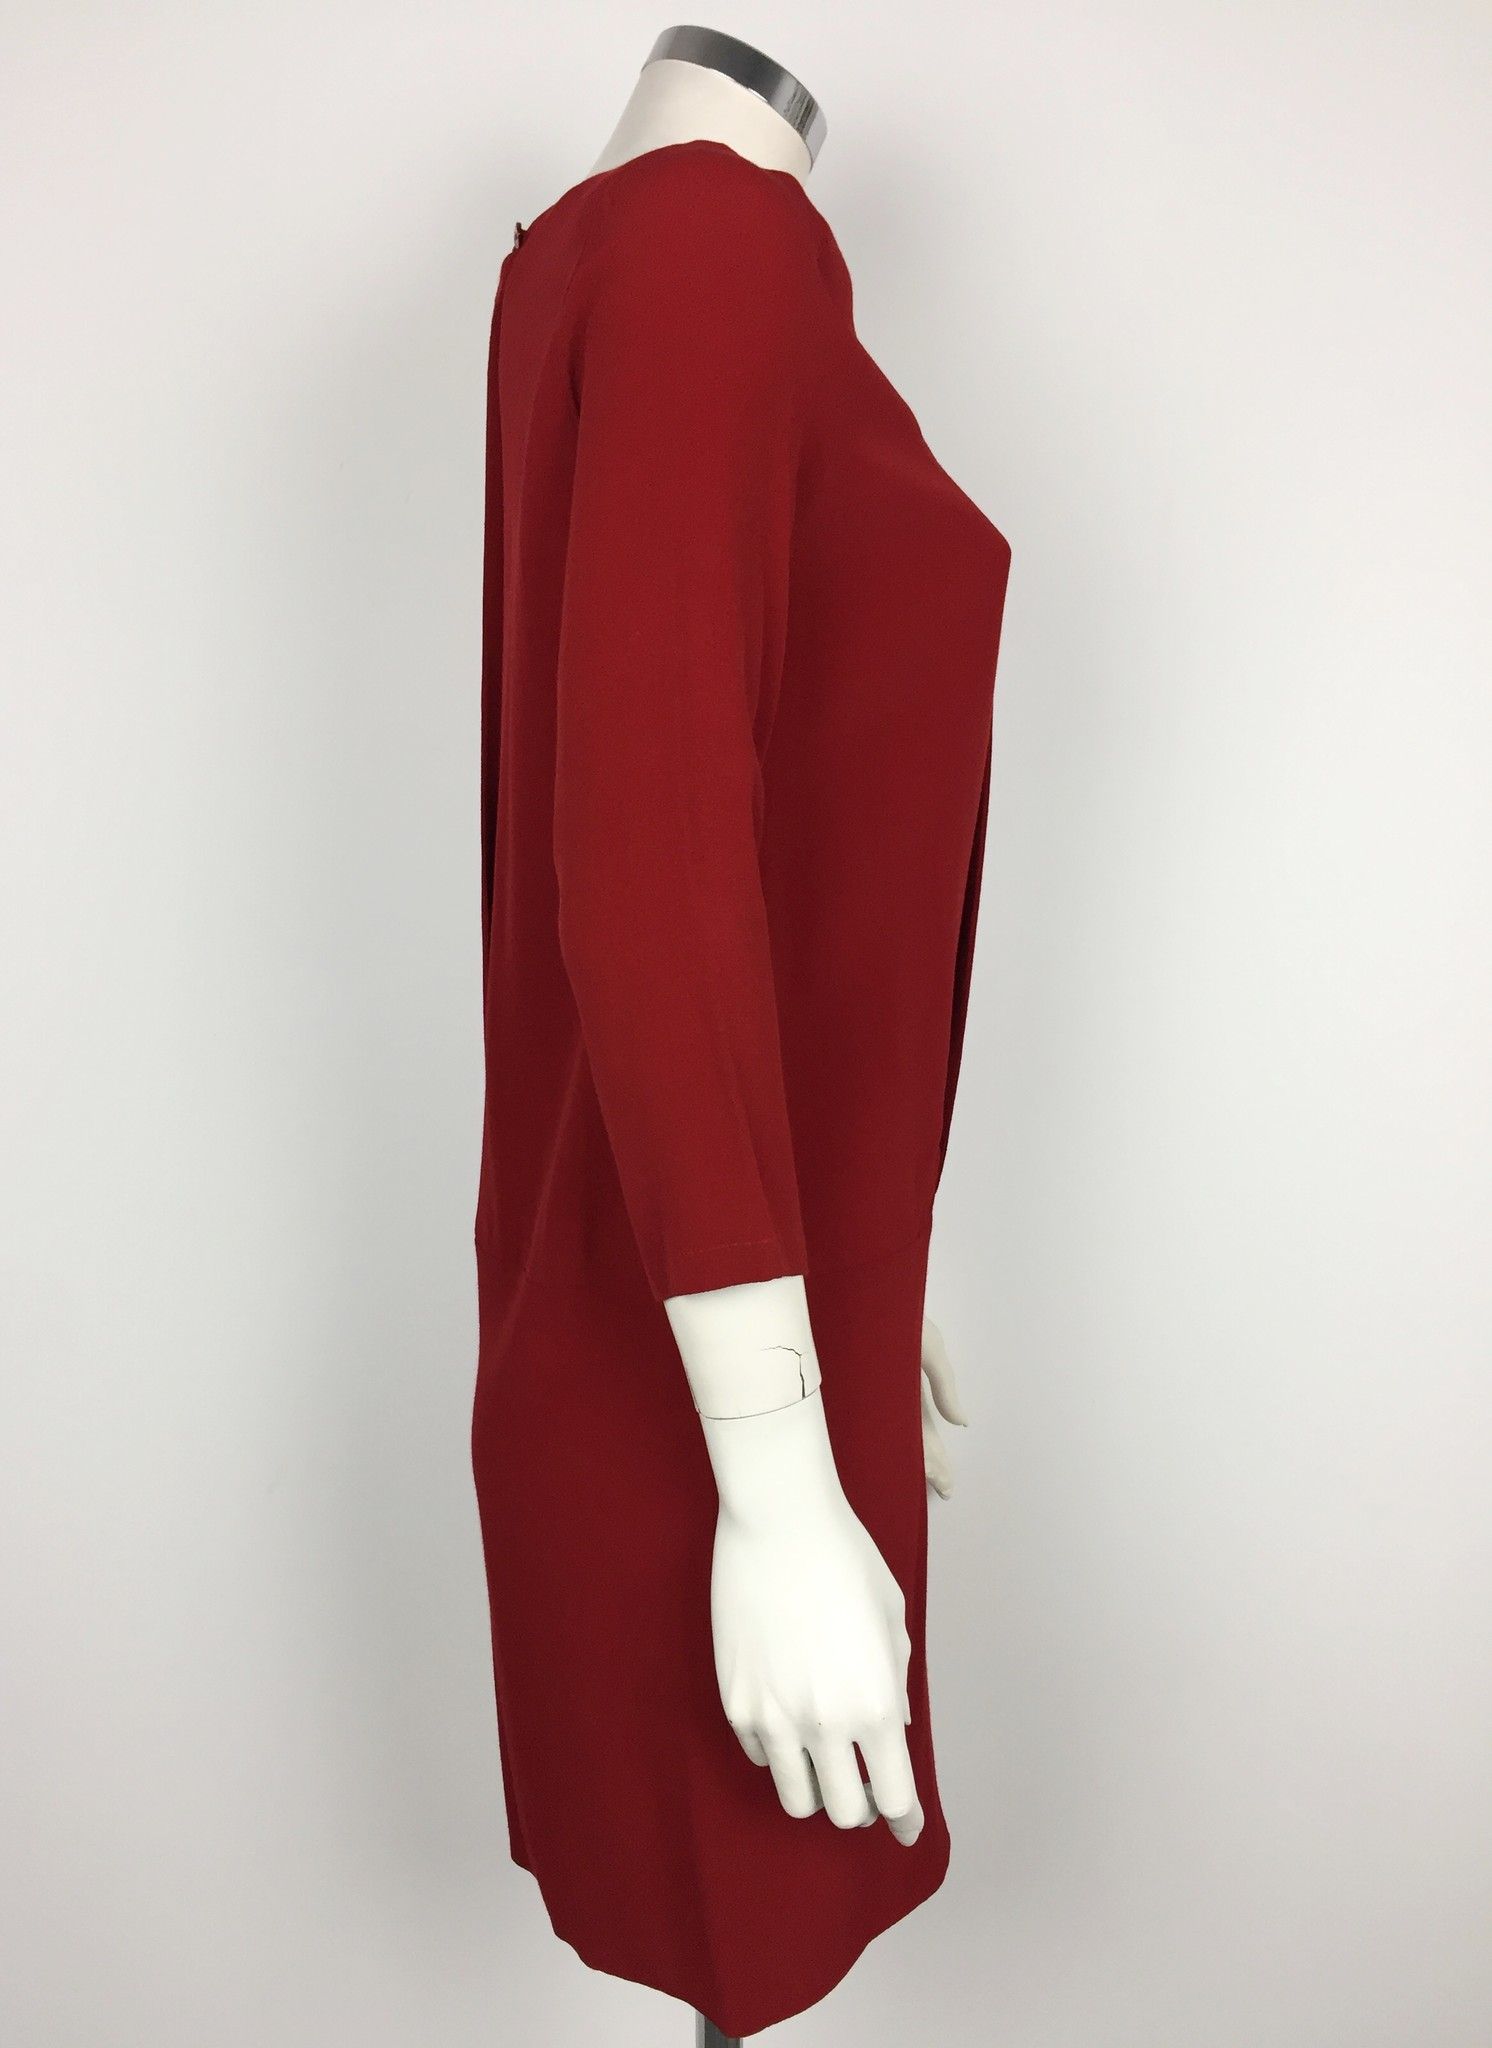 Adele Fado Short Dress Cod.70886